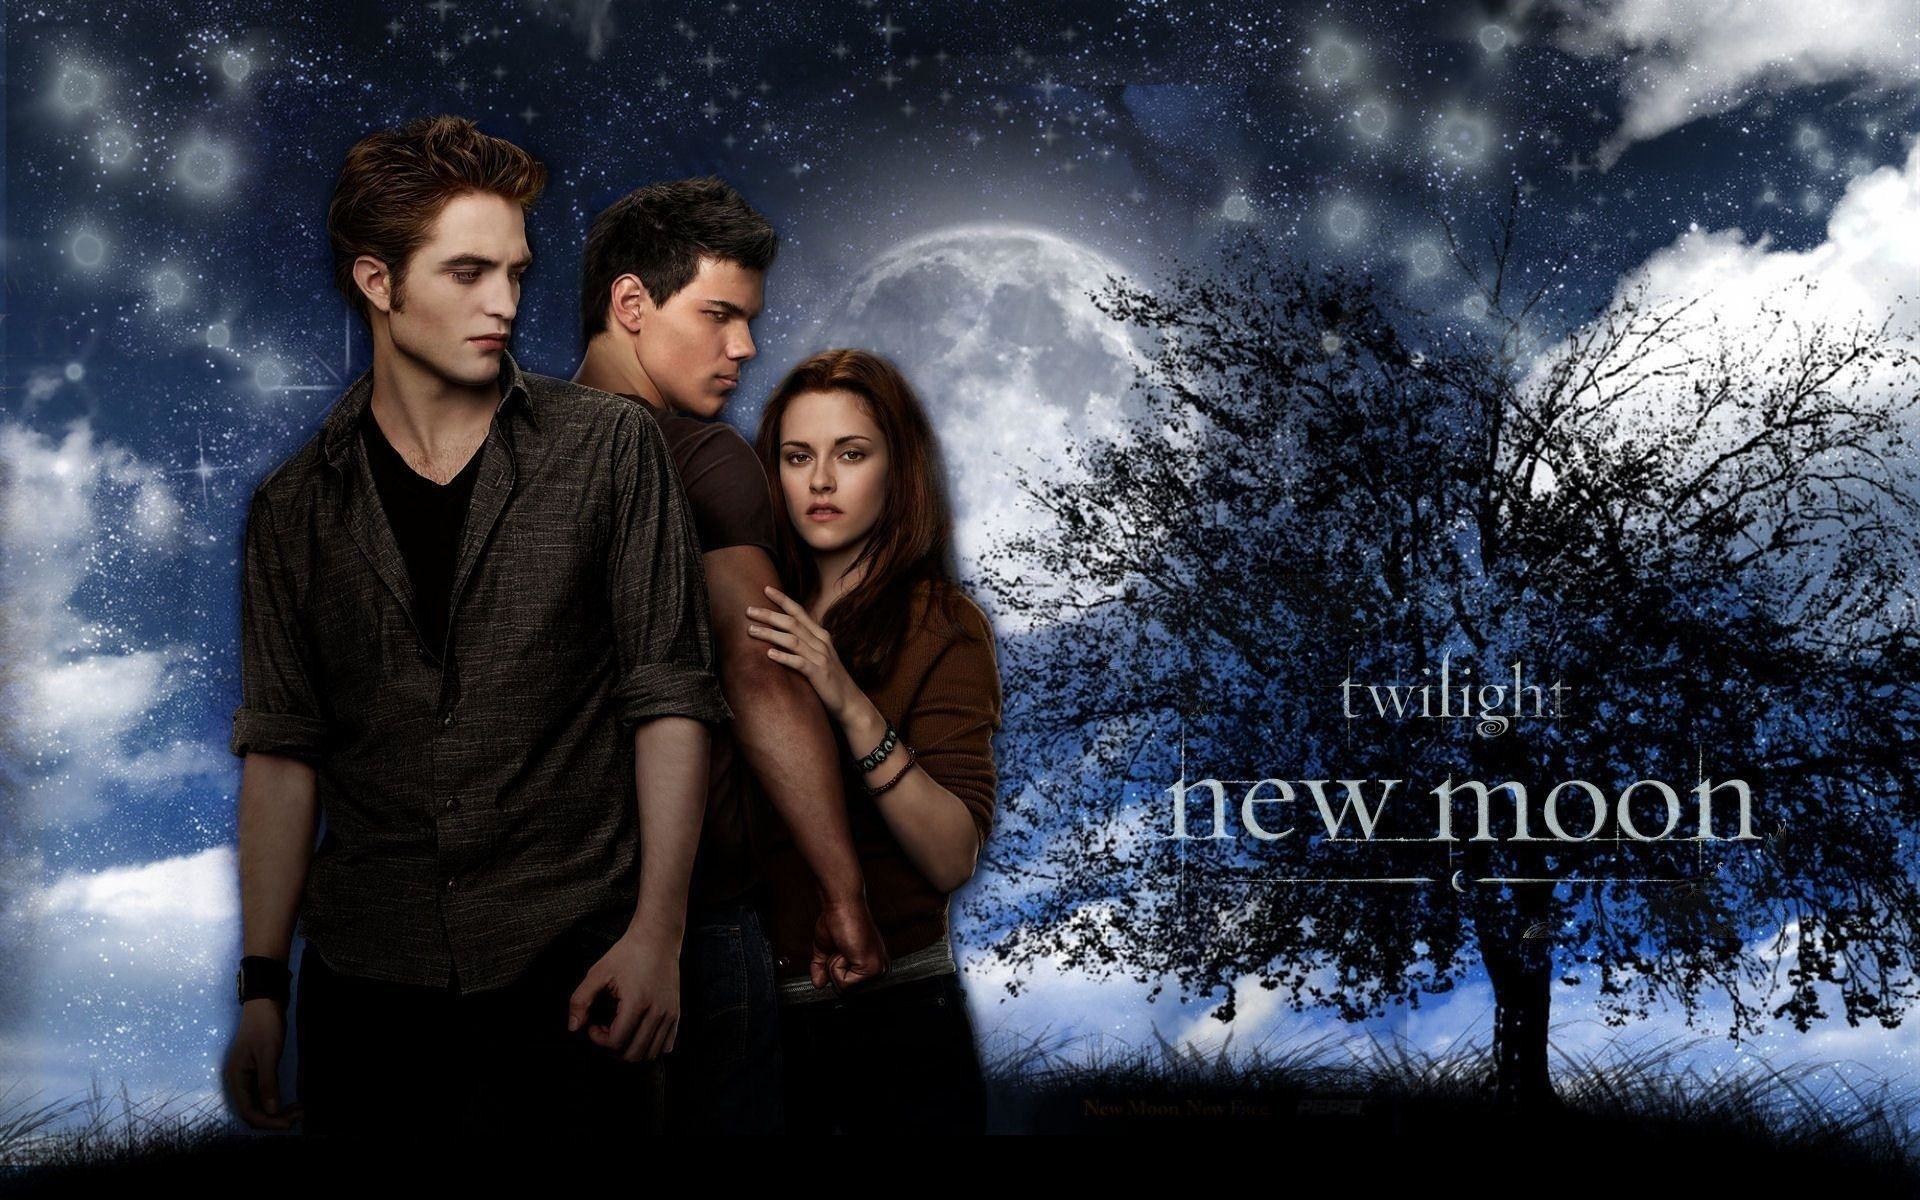 The Twilight Saga New Moon poster